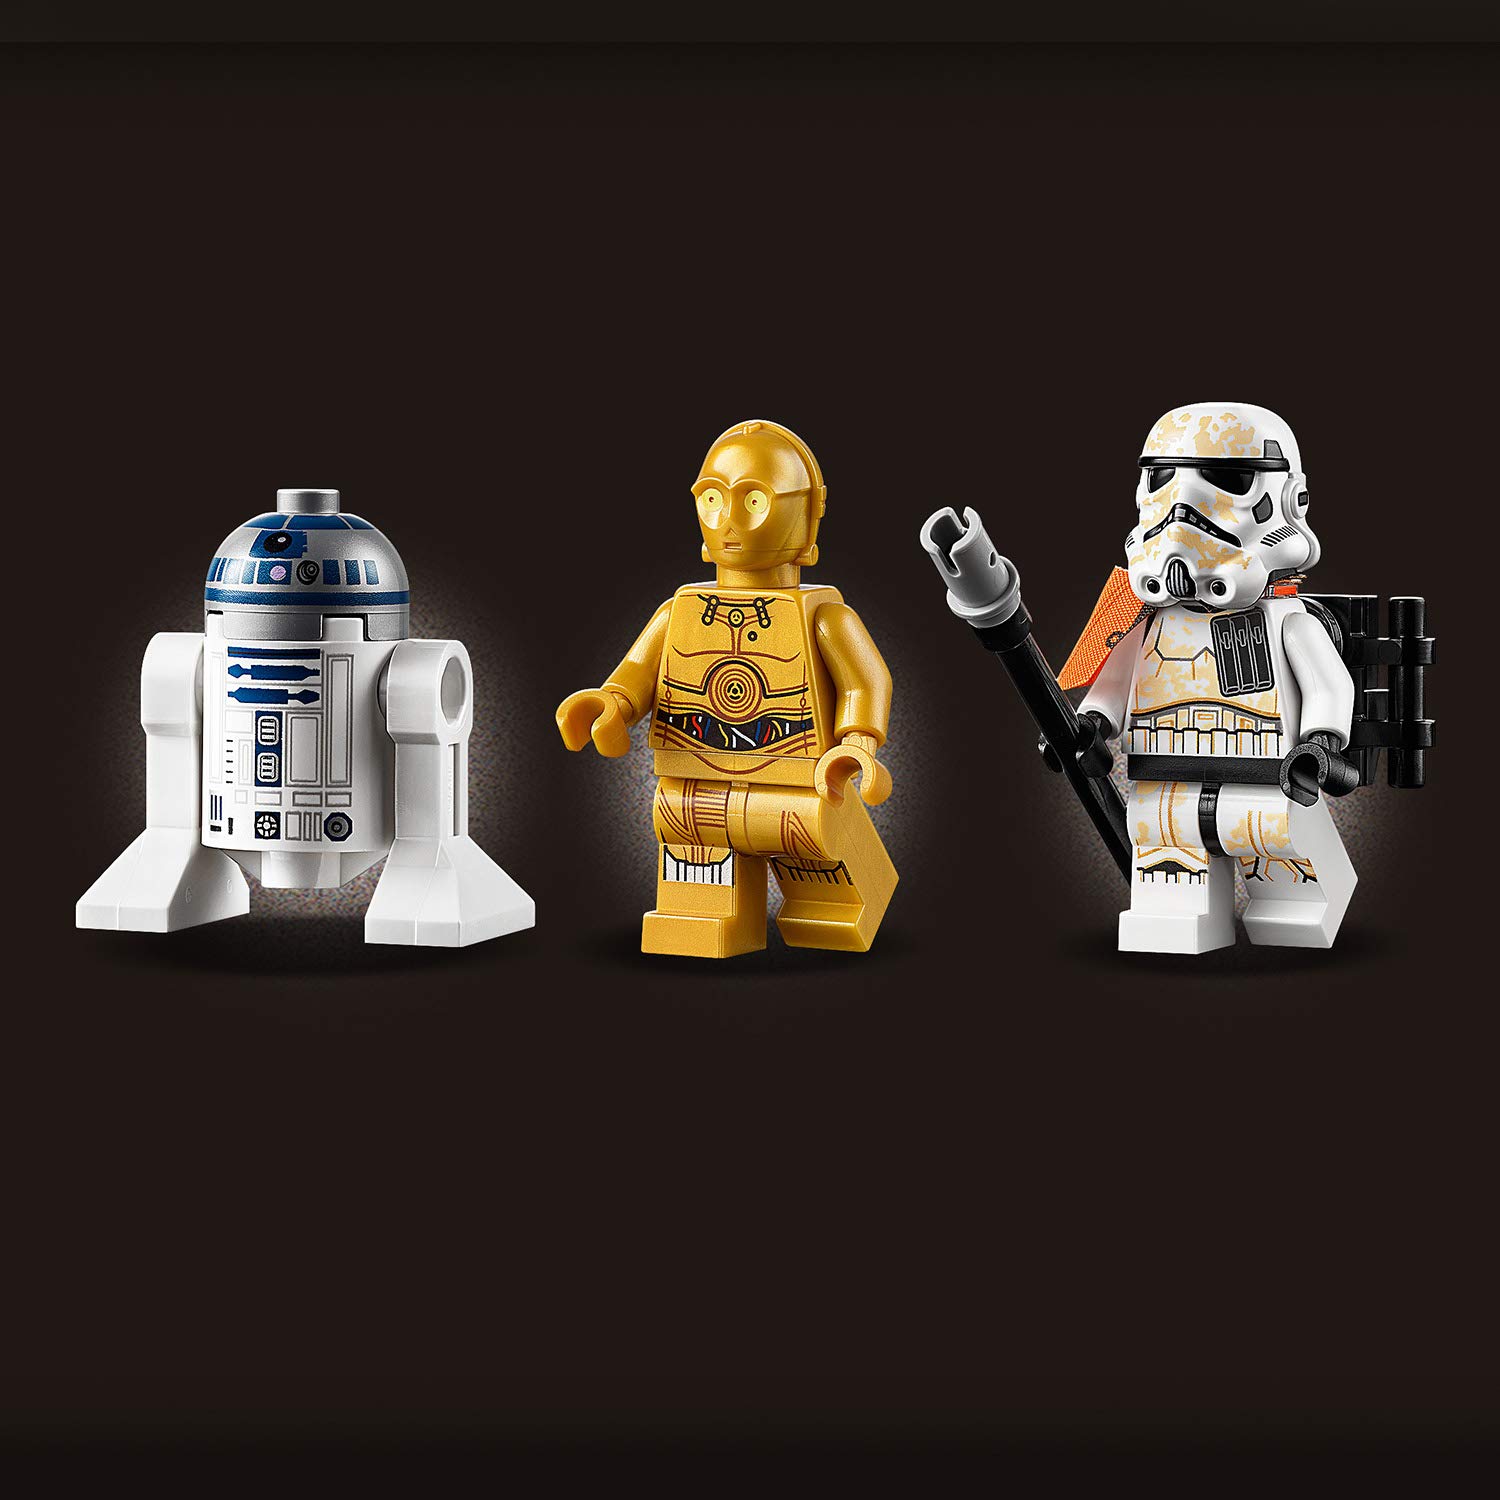 Конструктор LEGO Star Wars 